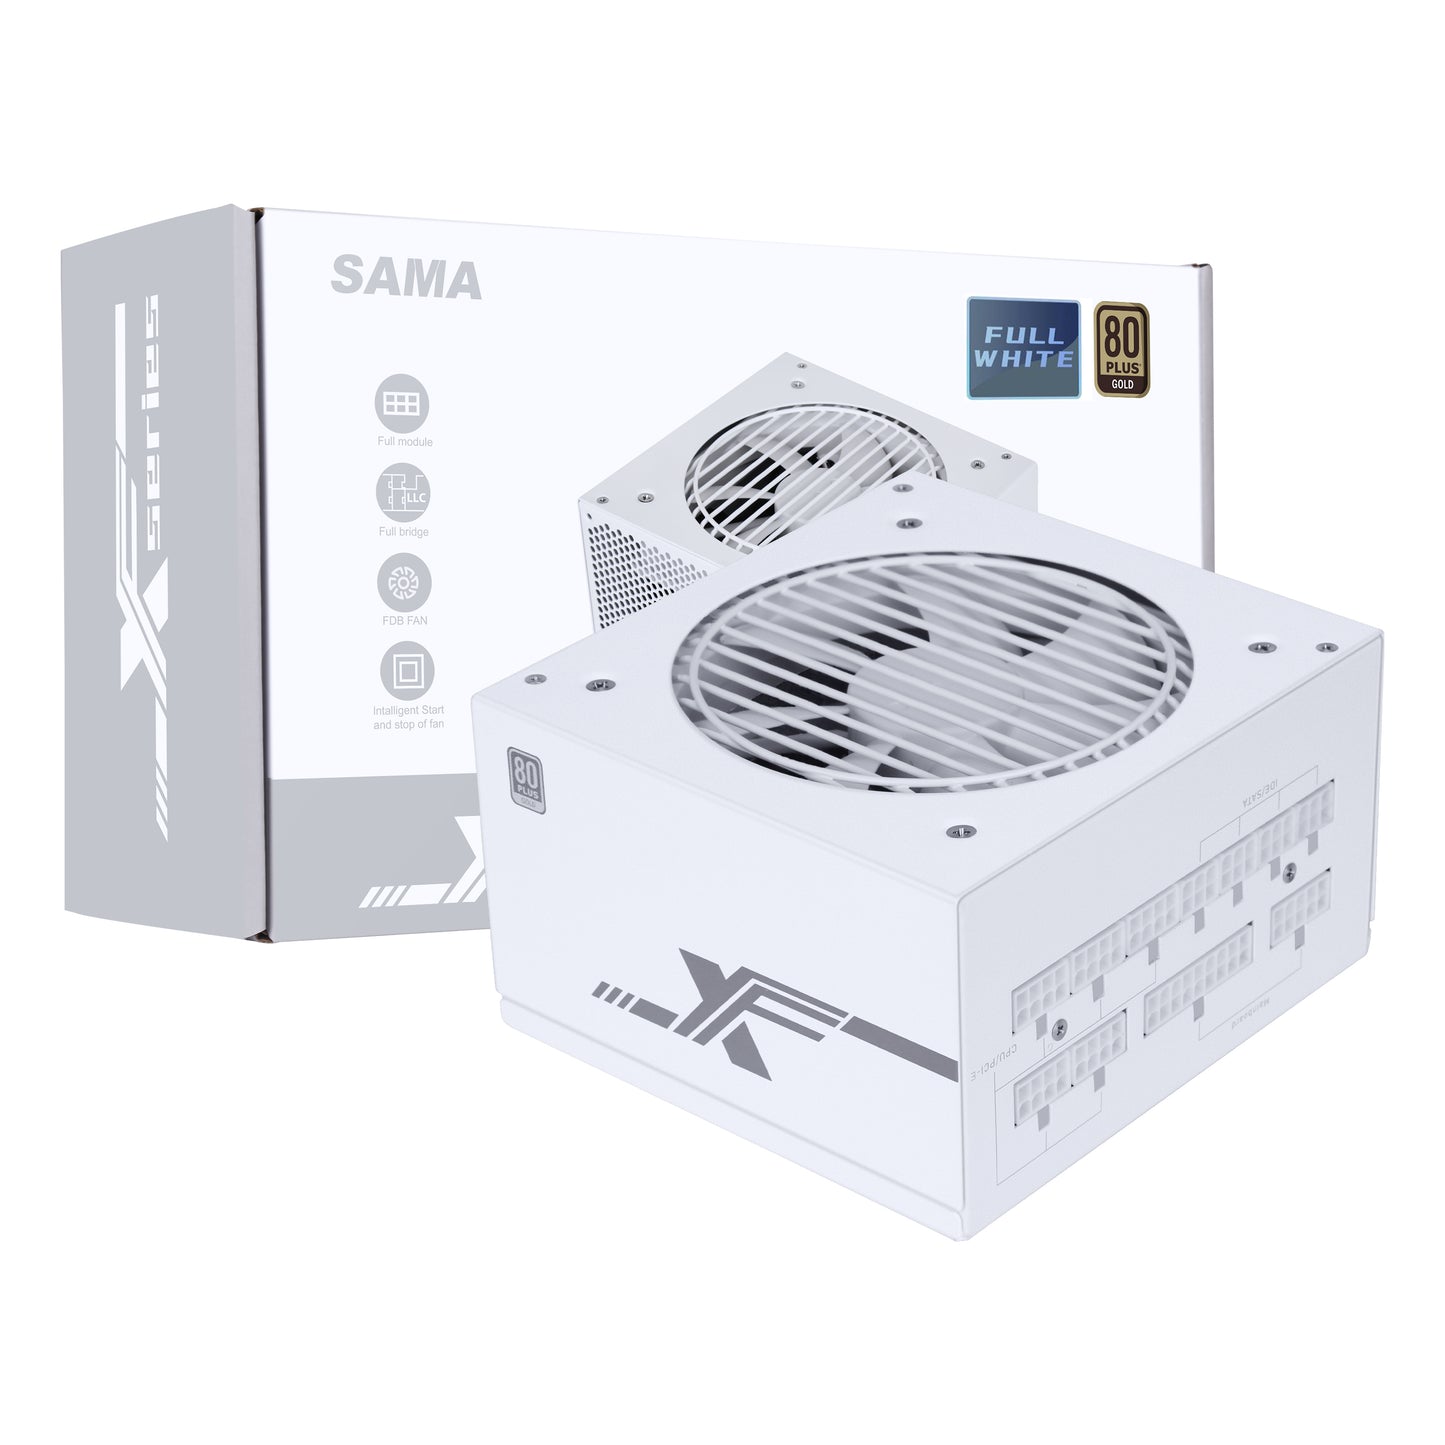 SAMA XF PC Power Supply